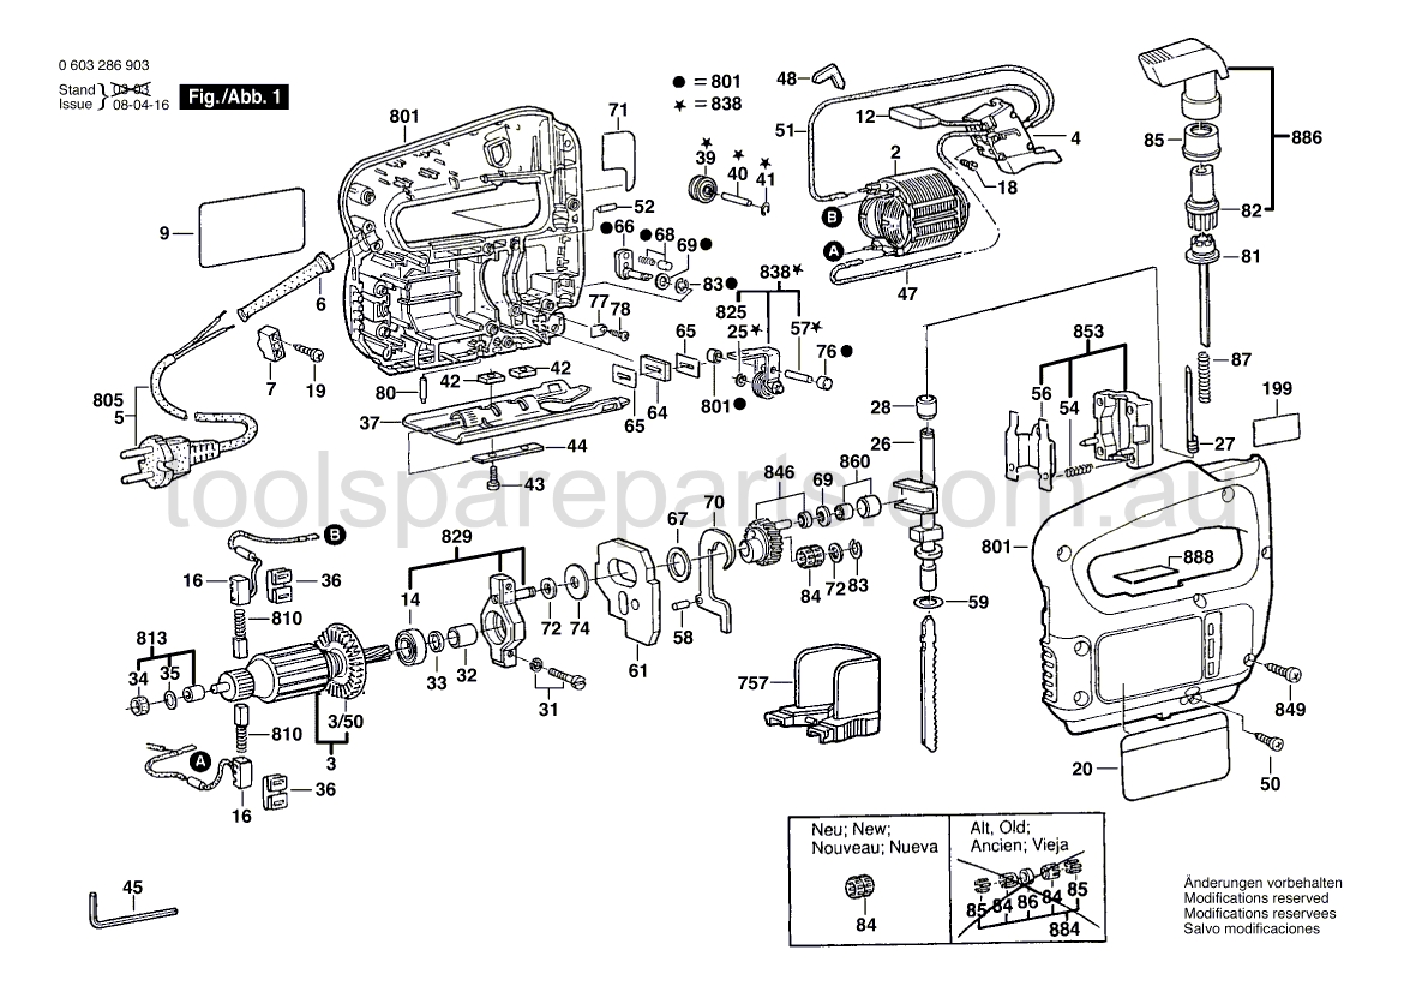 Bosch PST 65 PAE 0603286937  Diagram 1